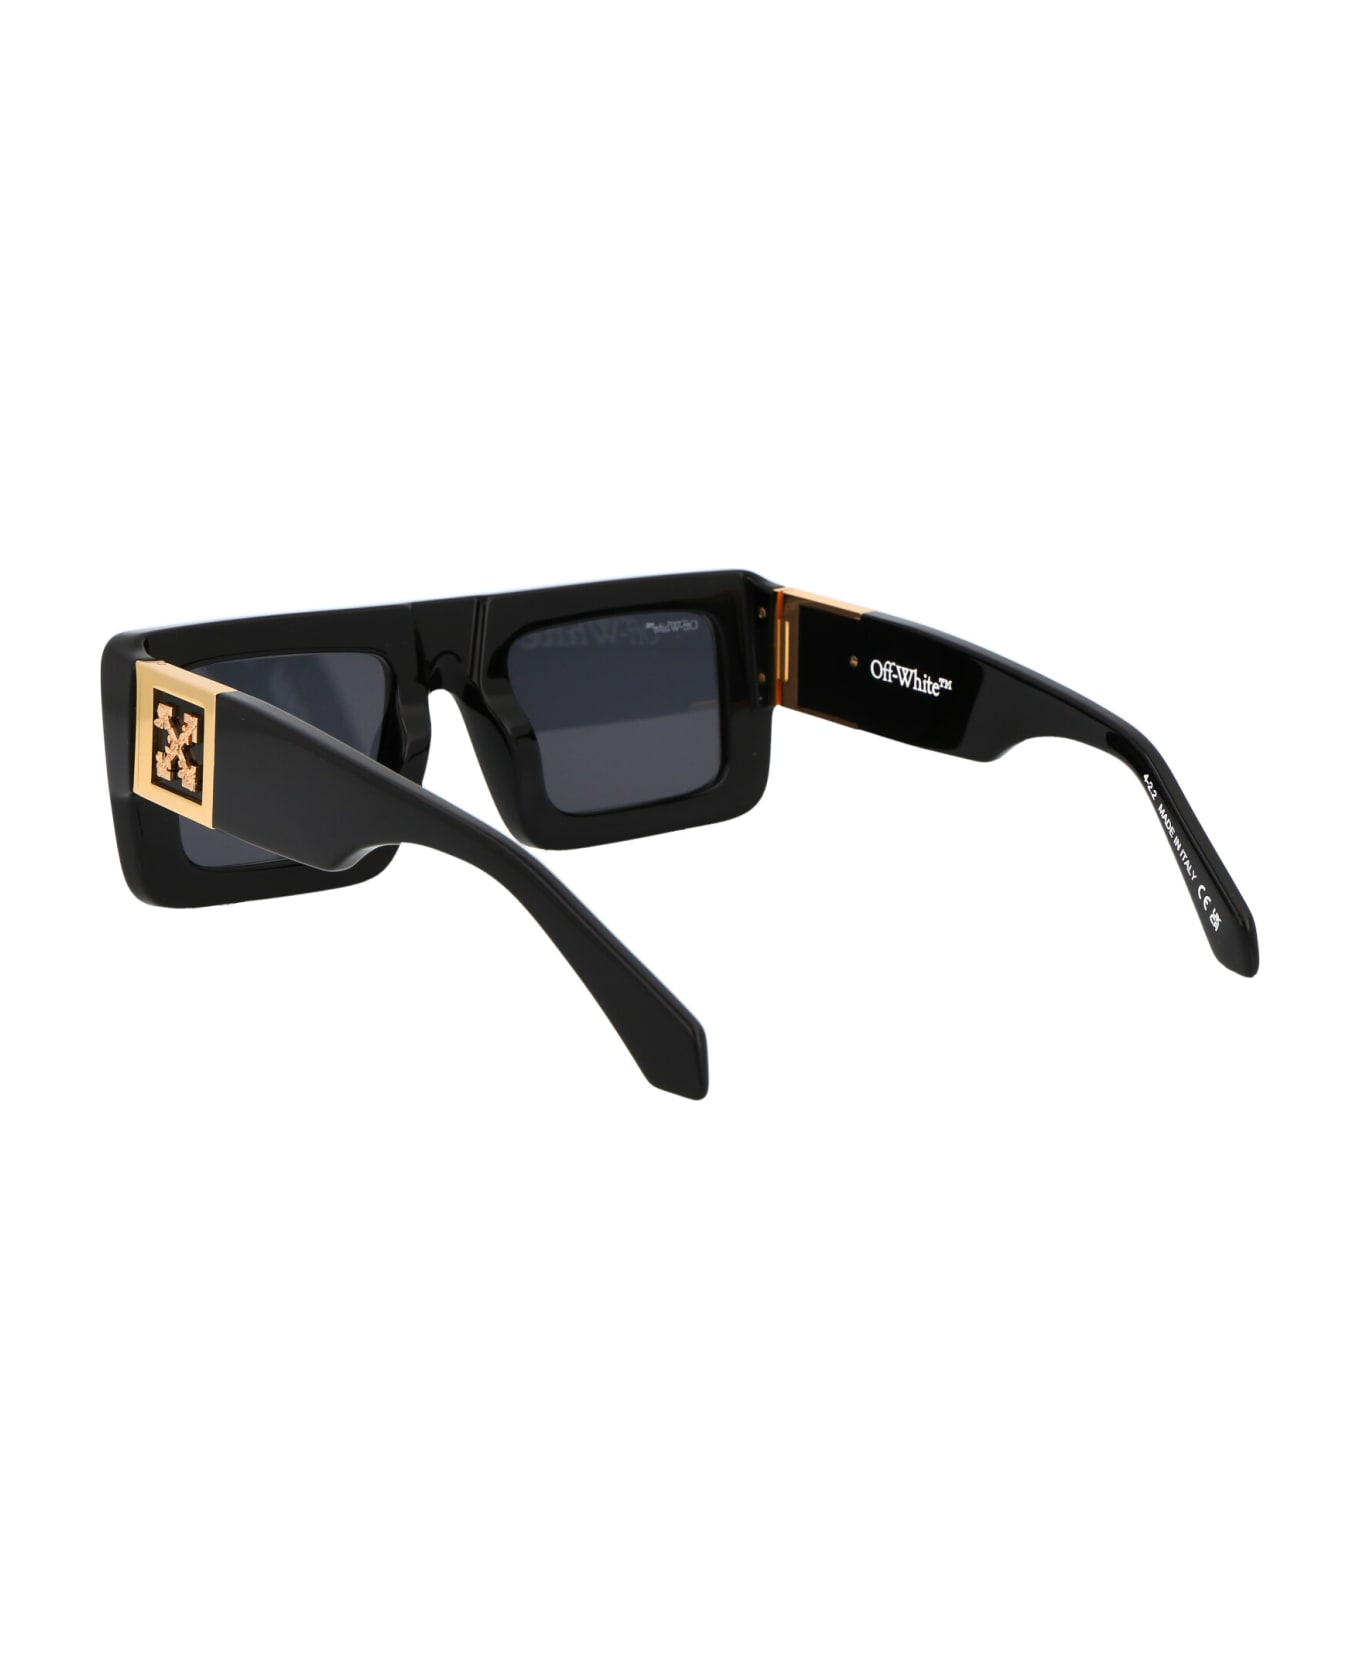 Off-White Leonardo Sunglasses grey - 1007 BLACK DARK GREY